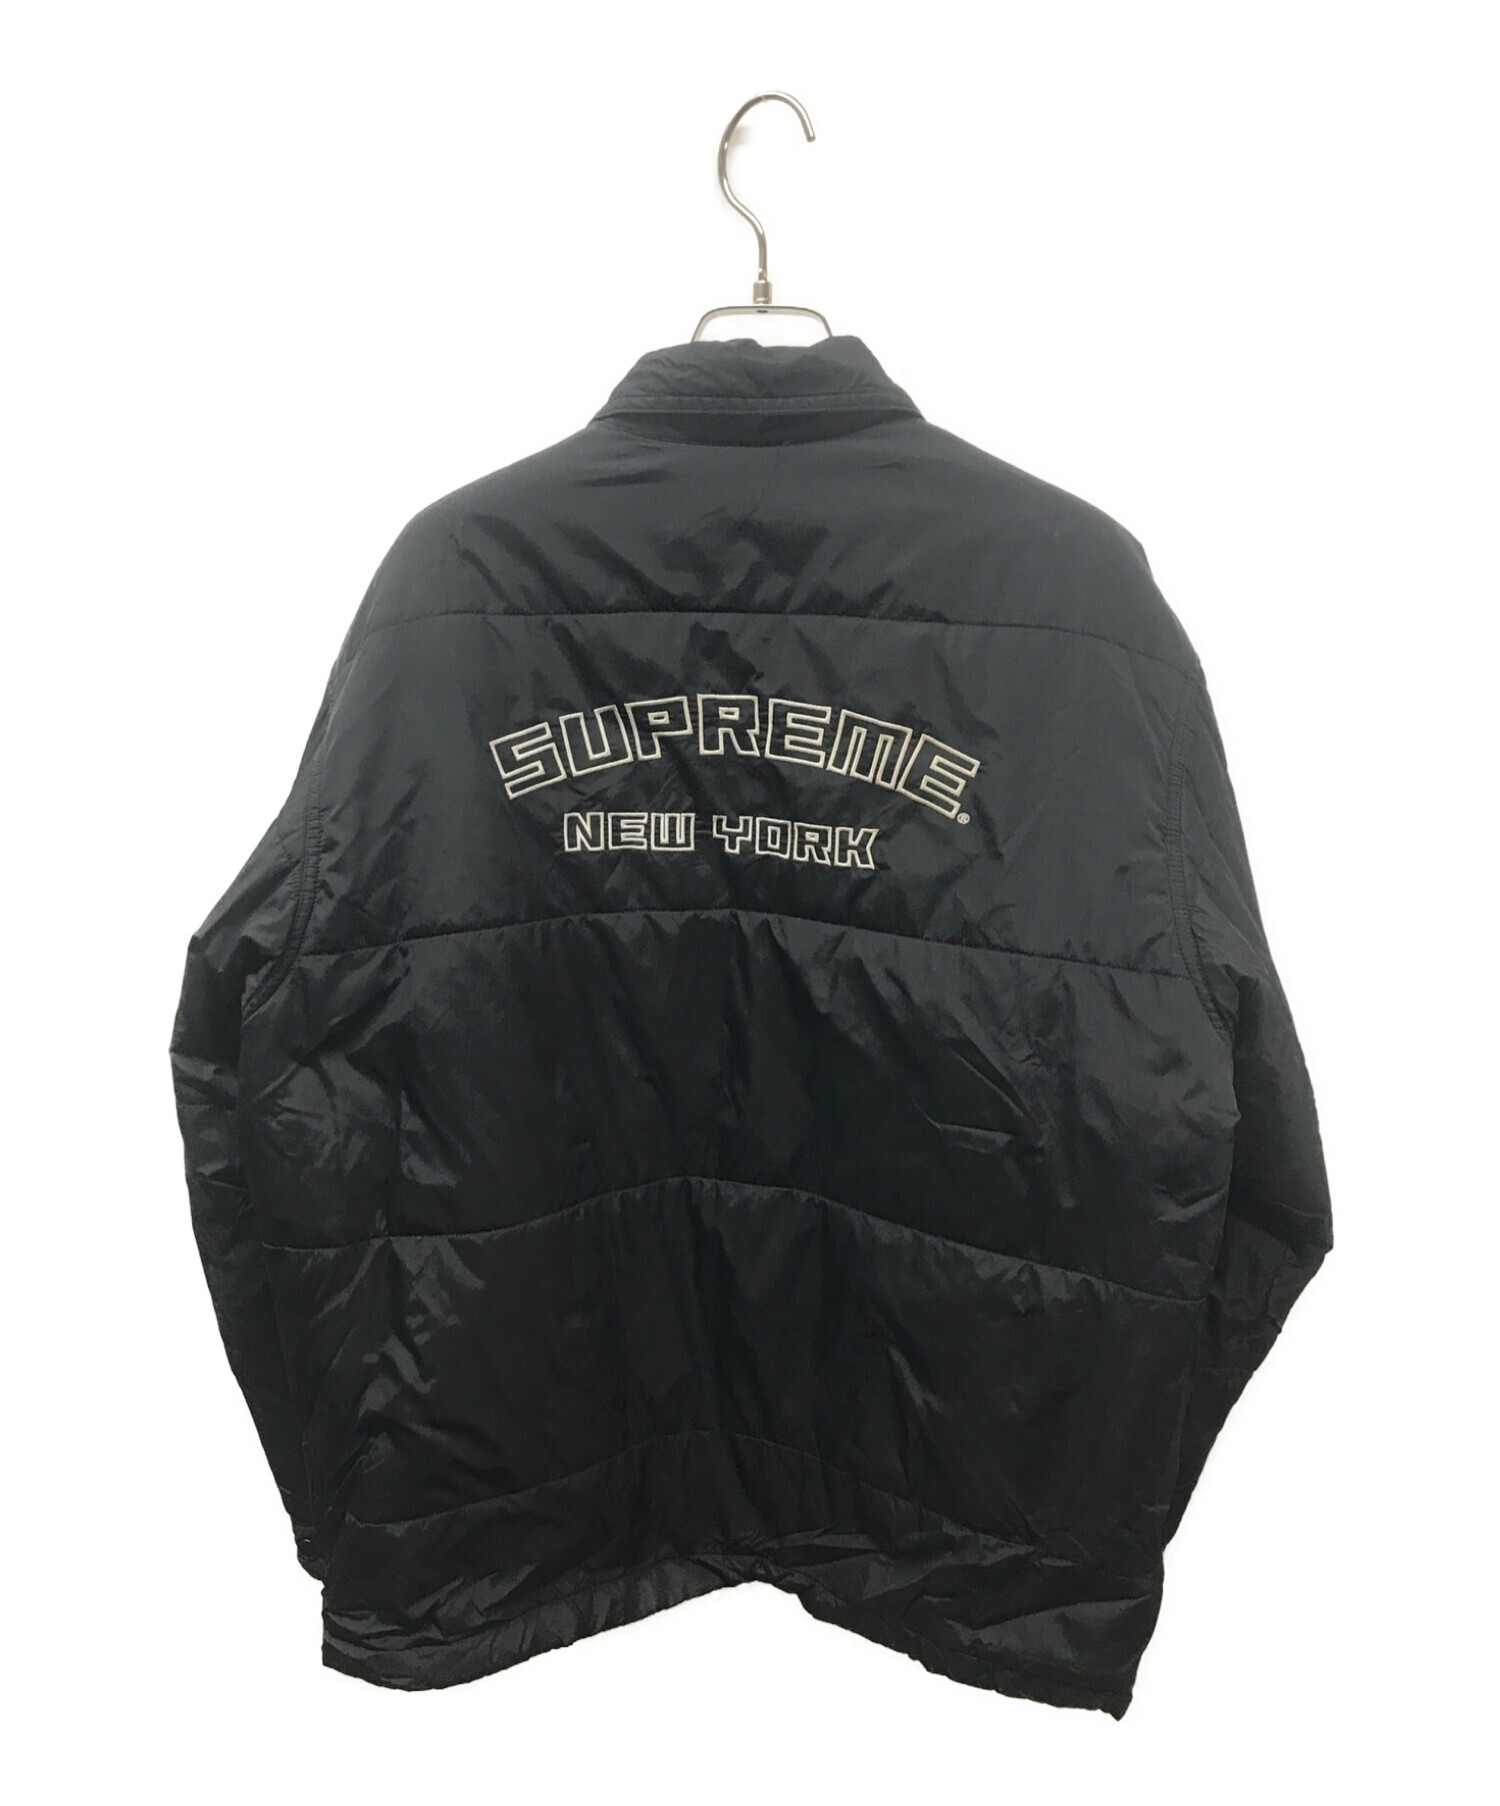 Gジャン/デニムジャケットSupreme New York jacket black Sサイズ